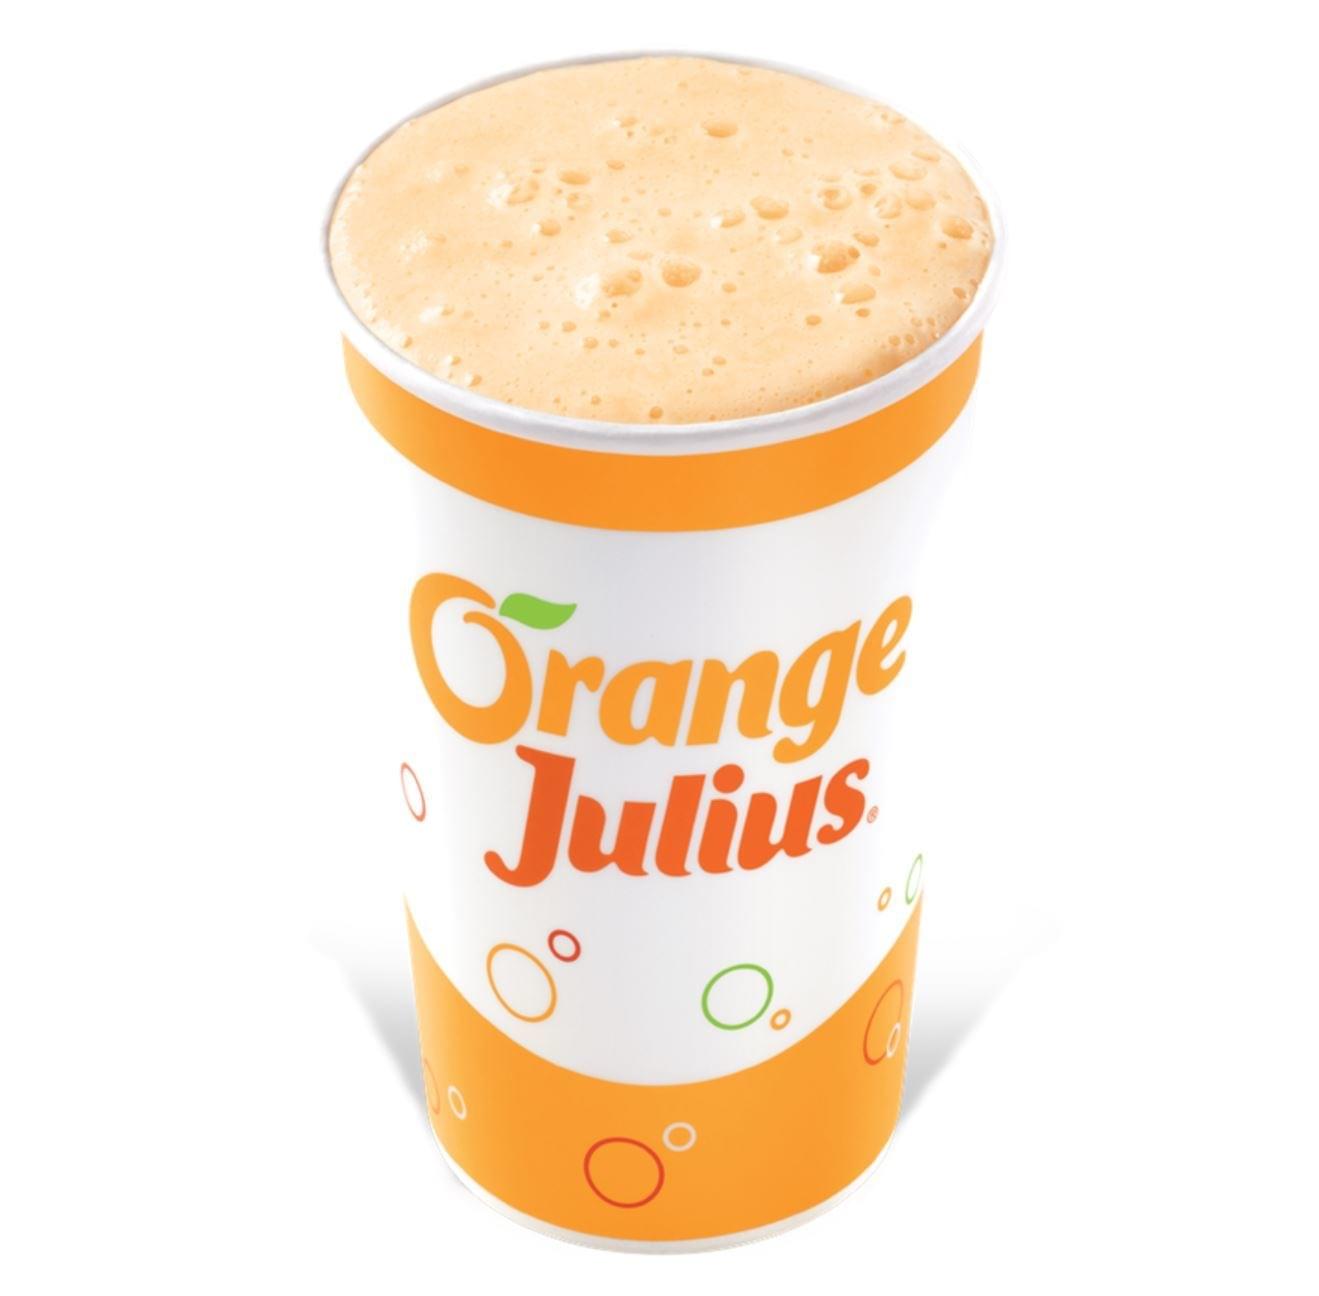 Dairy Queen Orange Julius Nutrition Facts